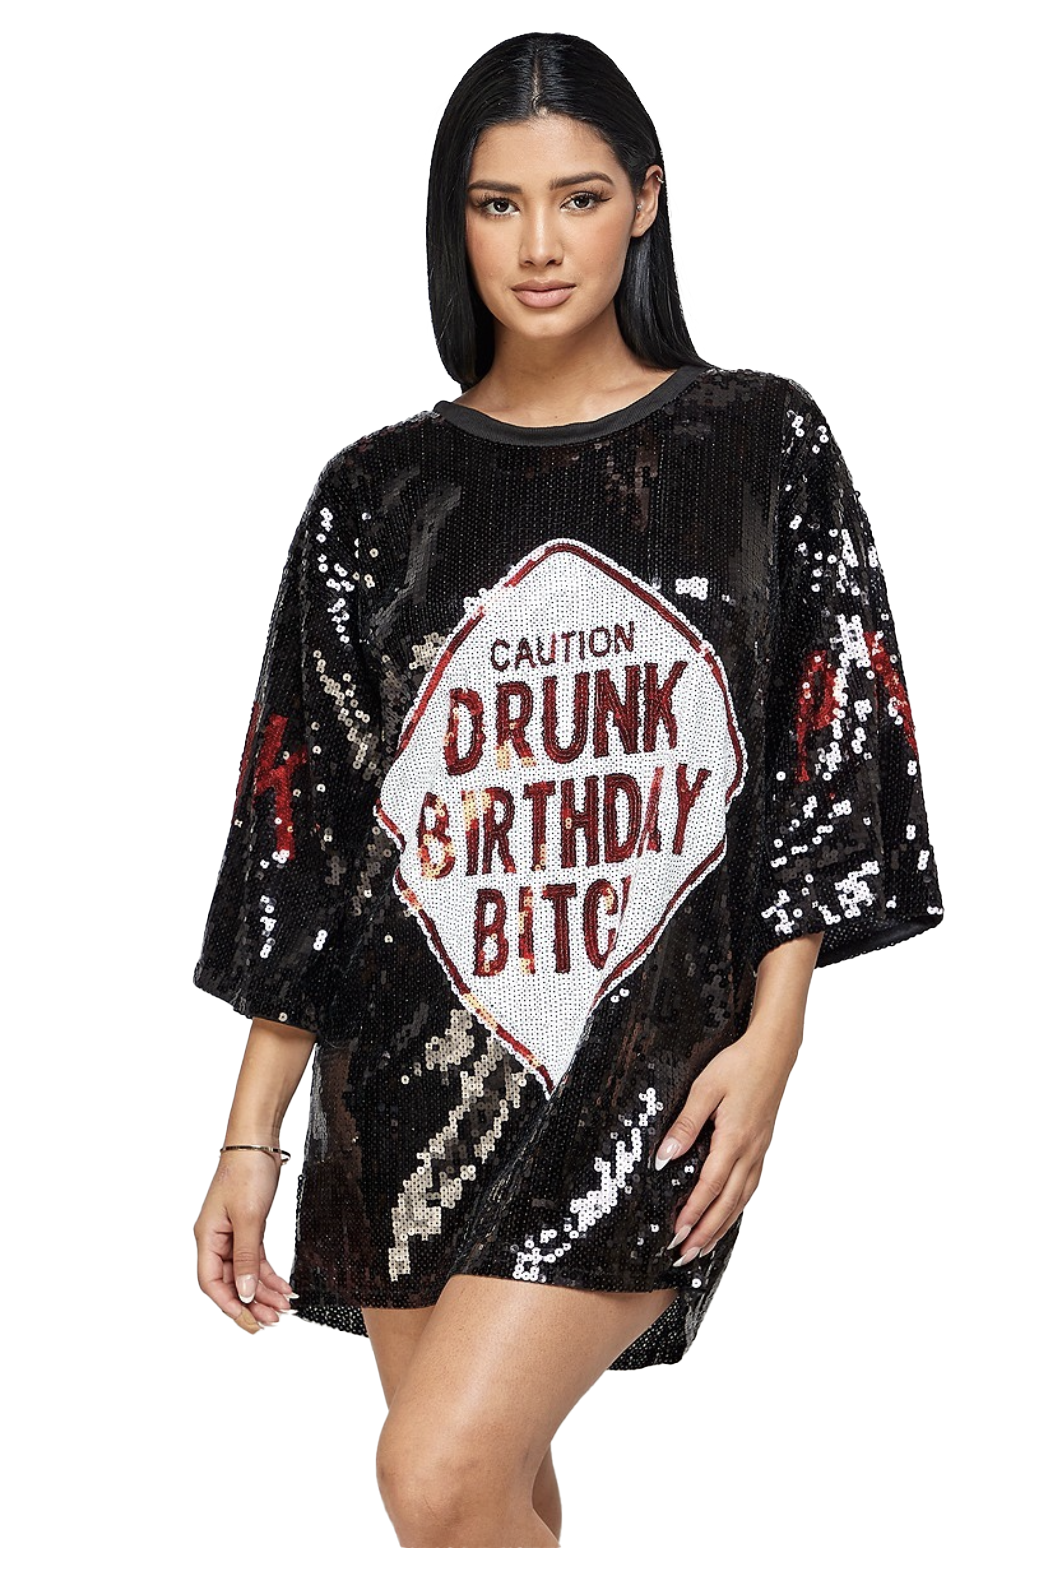 Caution Drunk Birthday Bitch Tunic/T-Shirt Dress